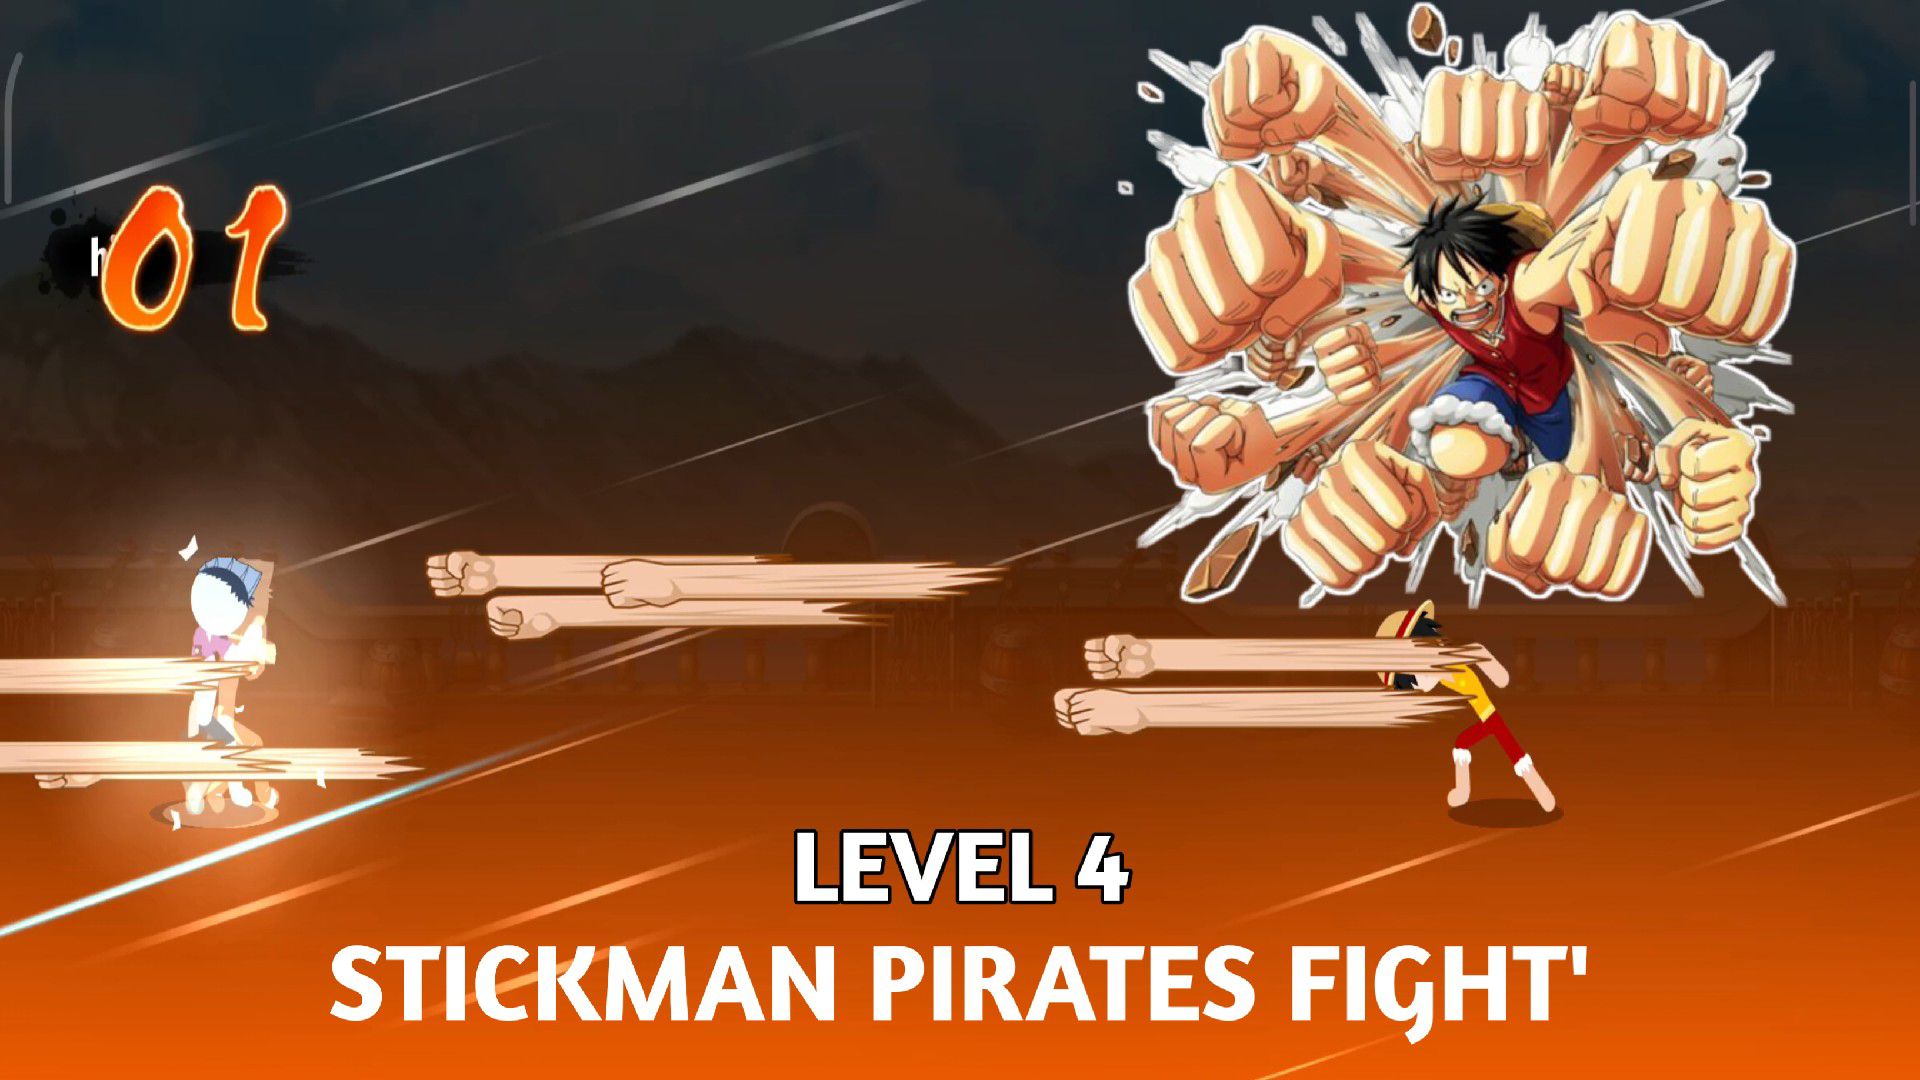 Stickman Fighter: Mega Brawl Walkthrough